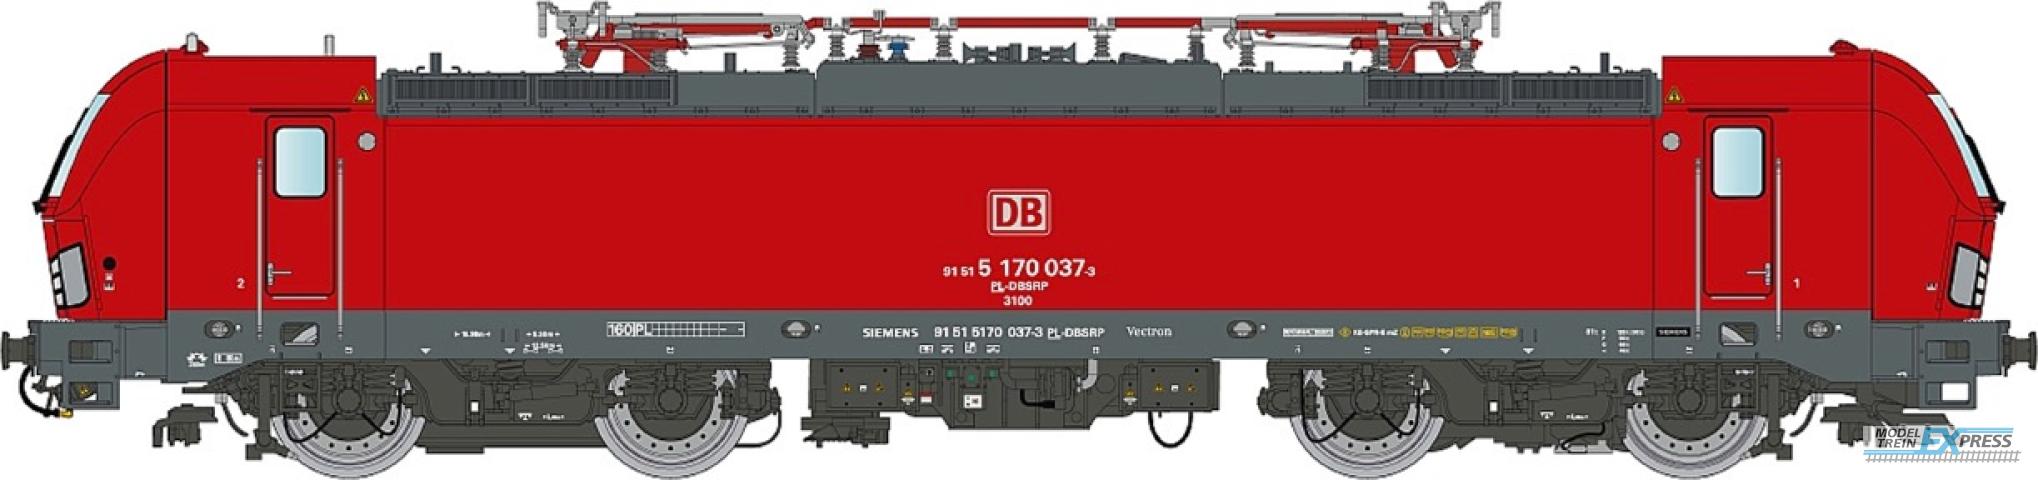 LS Models 18003S DB Schenker Rail Polska, red, DB logo, Ep.VI  /  Ep. ---  /  ---  /  ---  /  ---  /  ---